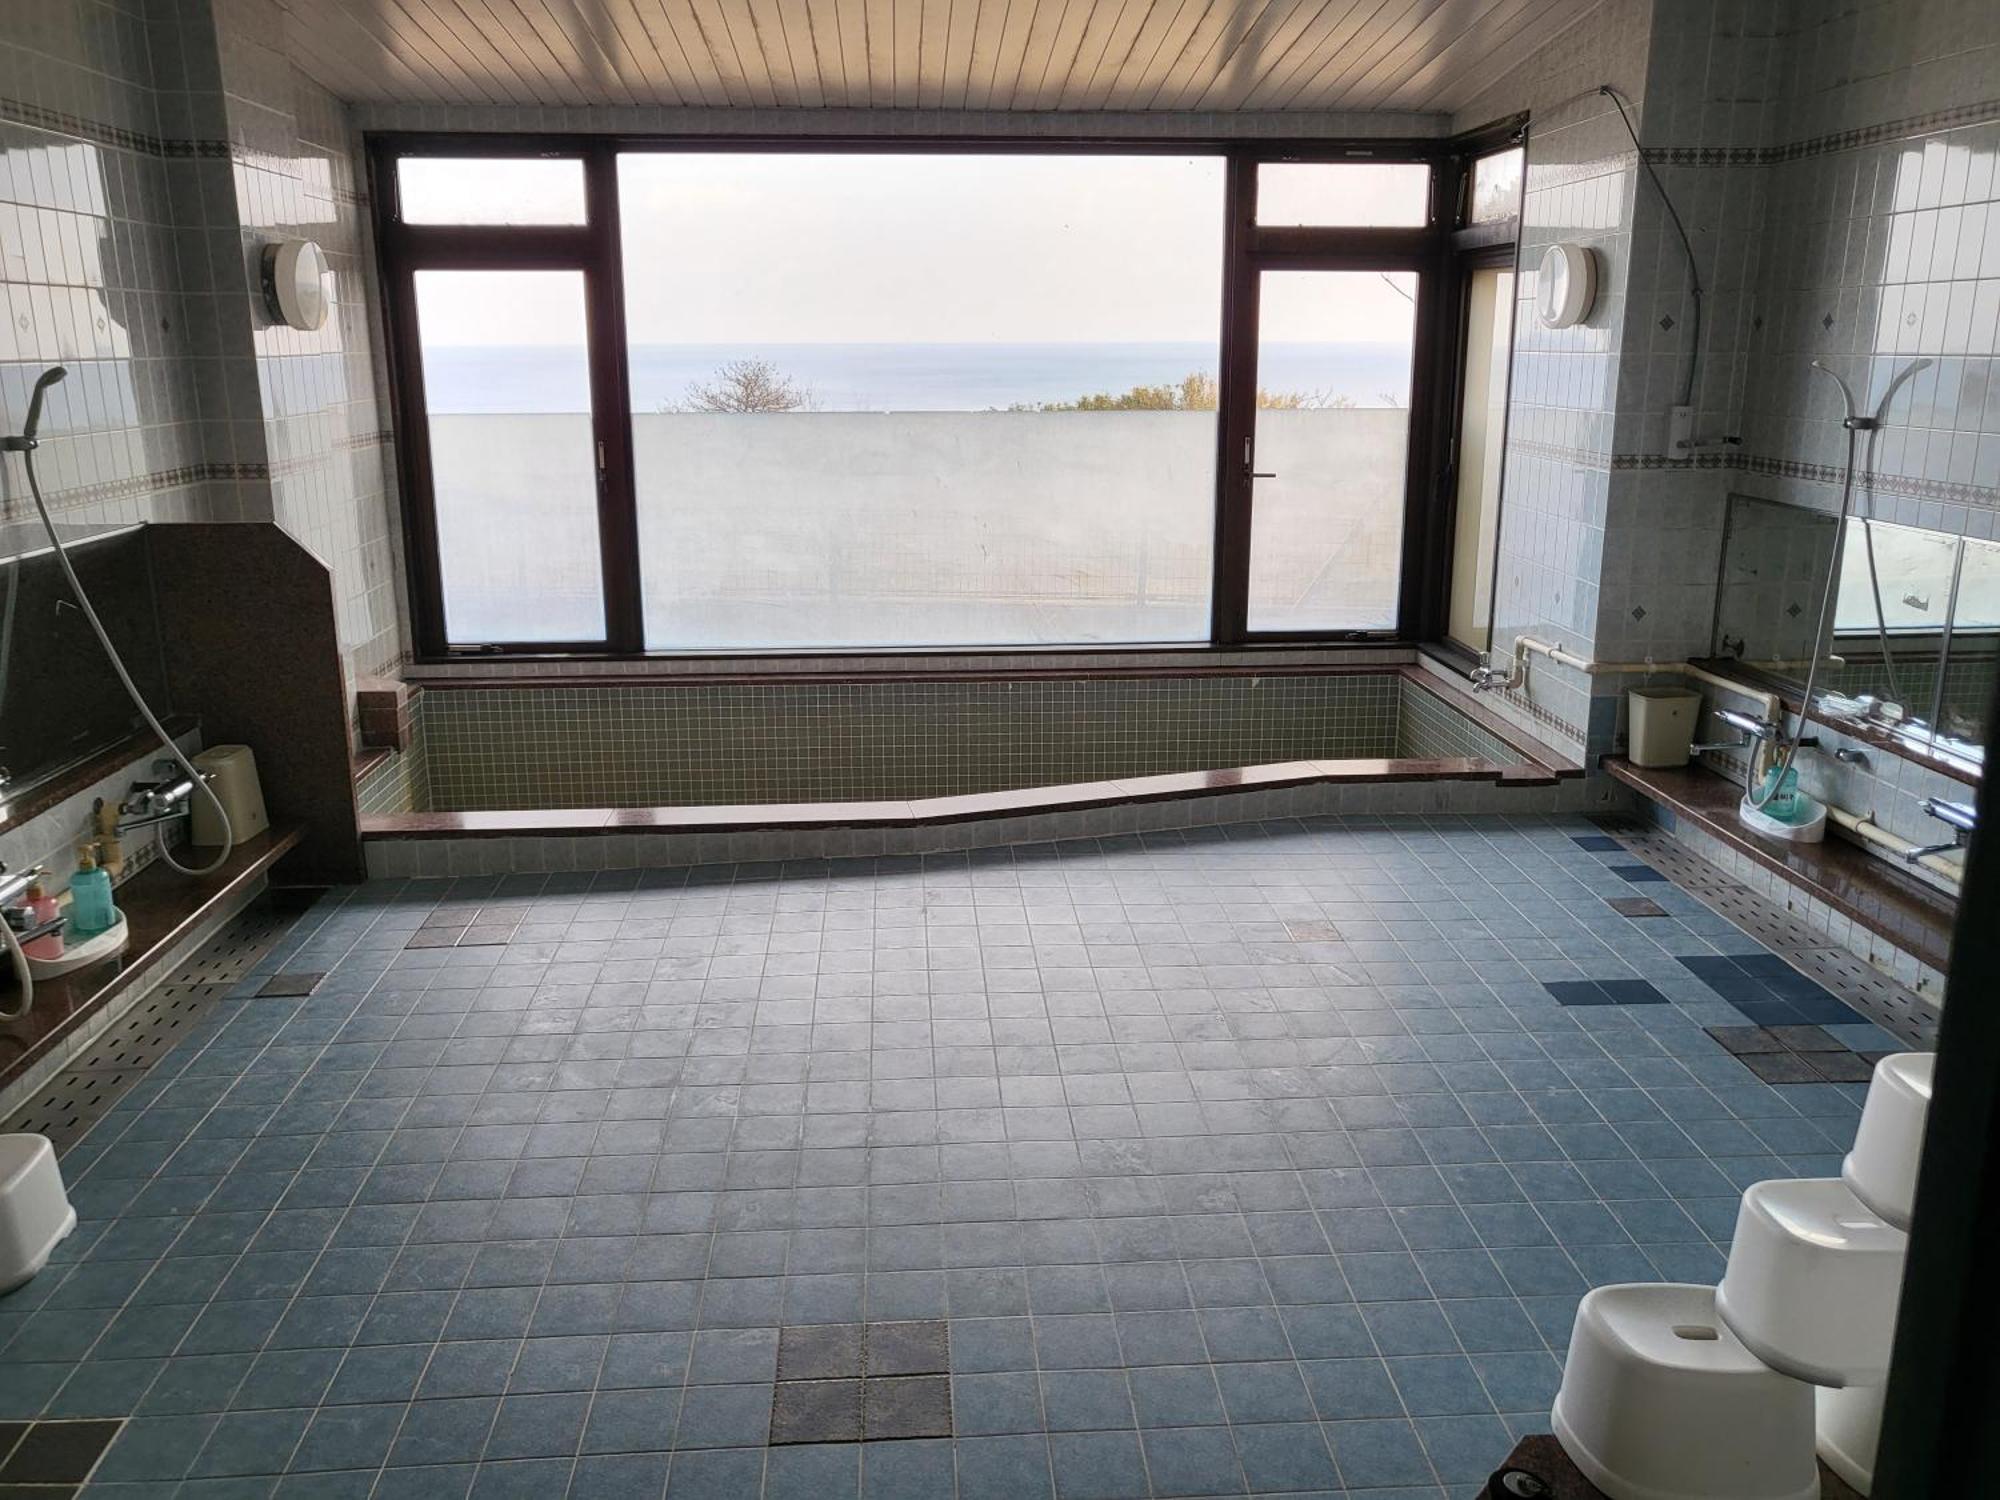 Tsushima Dae-A Hotel 外观 照片